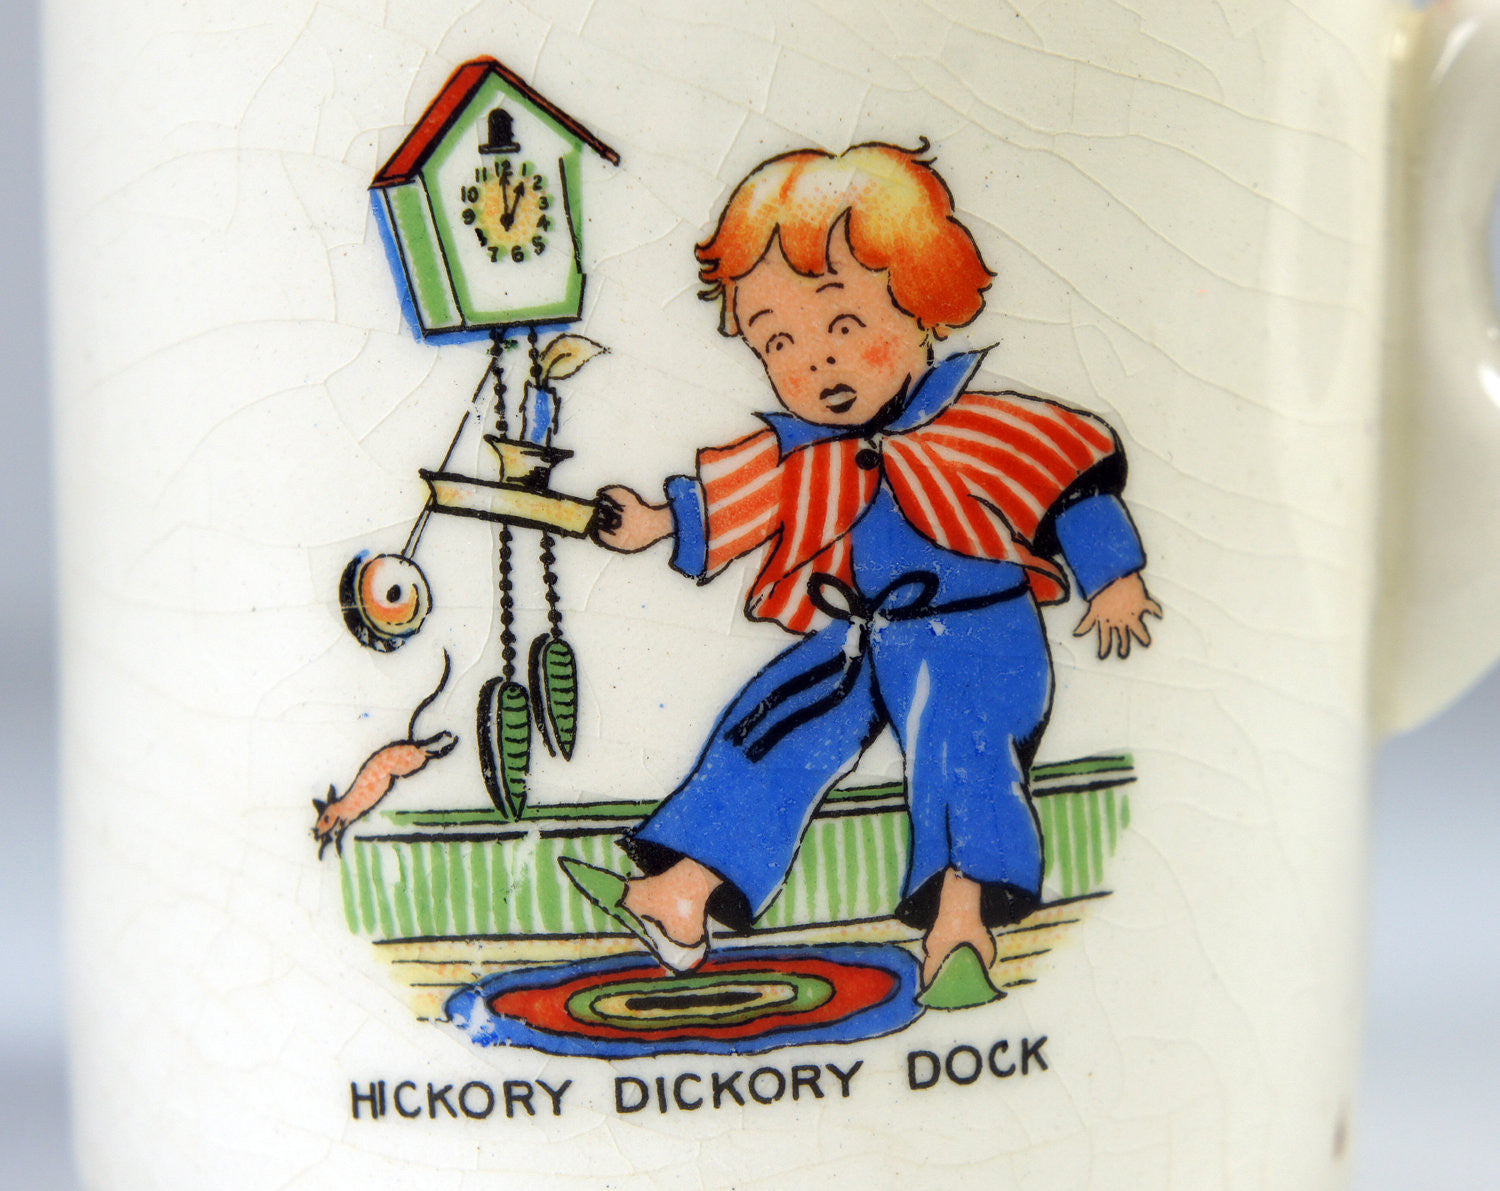 Early 1900's Hickory Dickory Dock Nursery Rhyme Coffee Mug